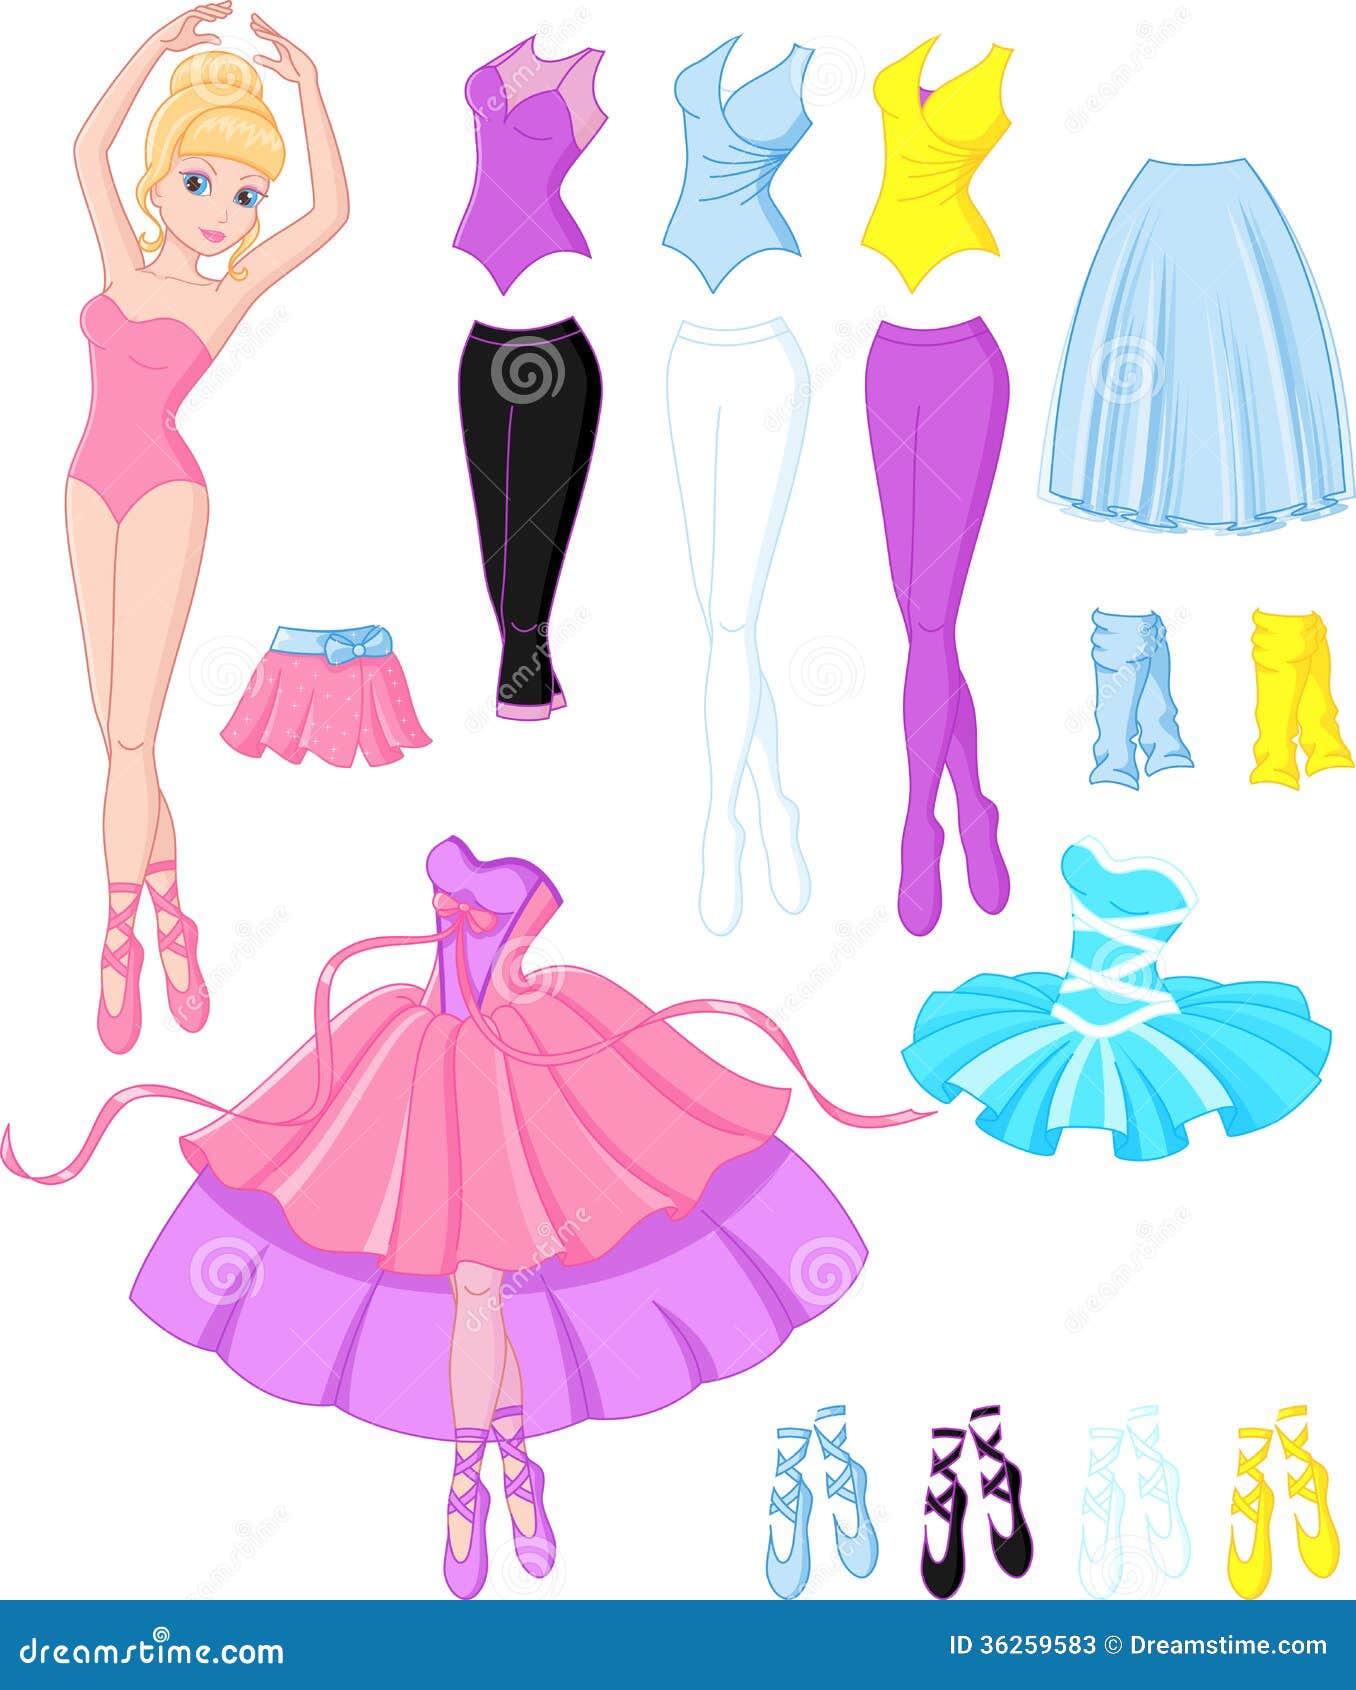 Ballerina Dresses Stock Photos - Image: 36259583